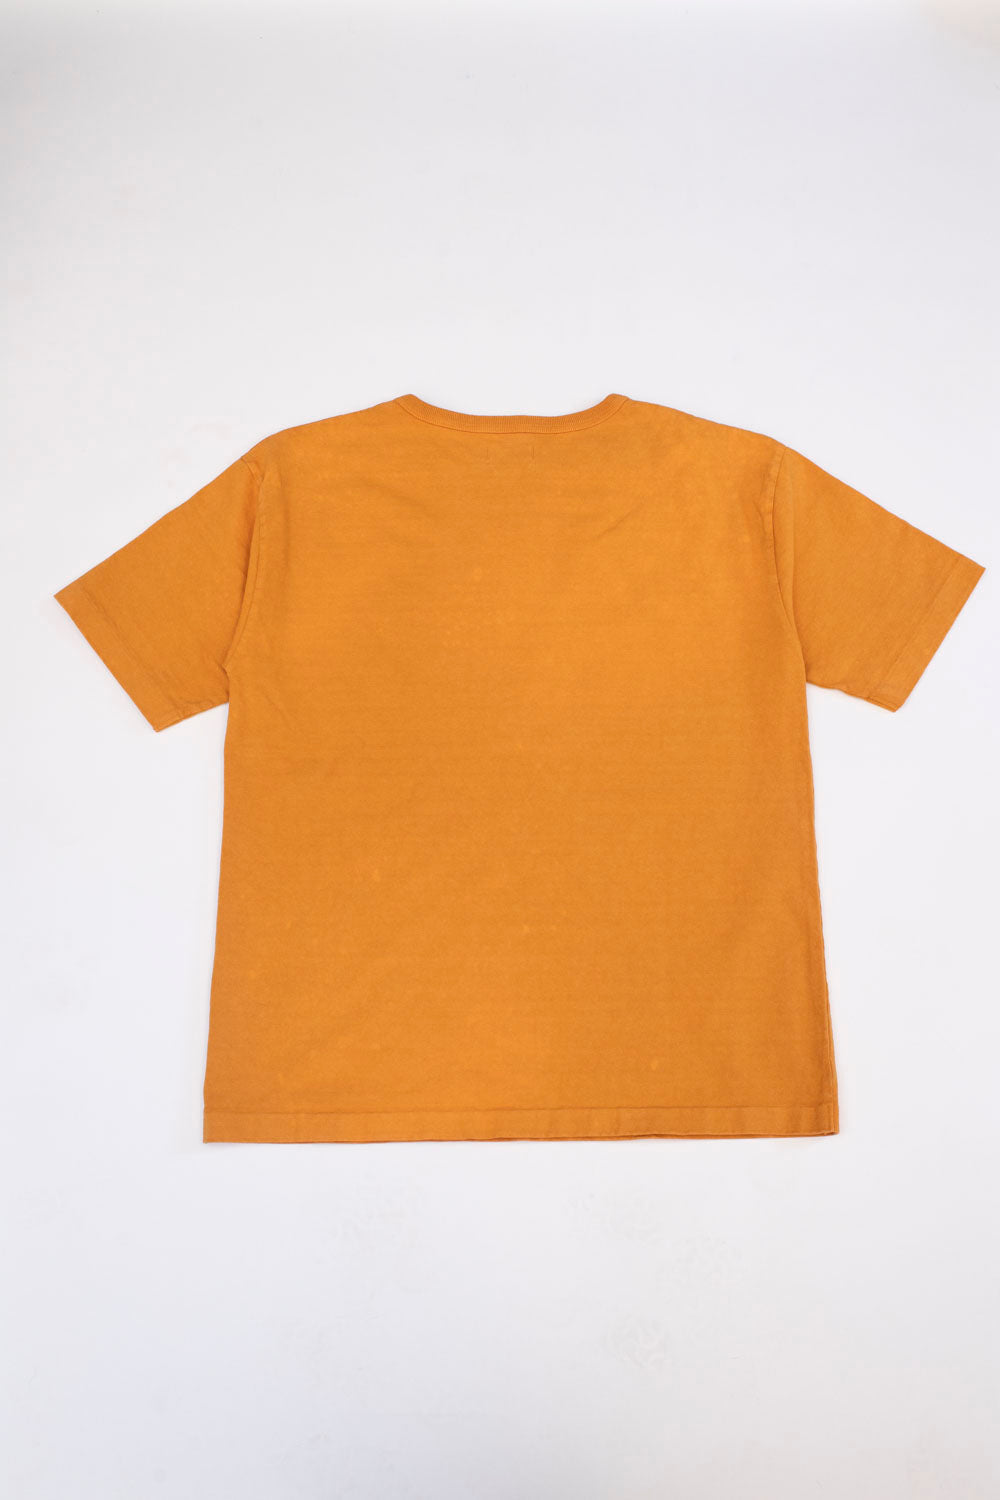 MSP-9007 - Short Sleeve Tee Shirt - Orange